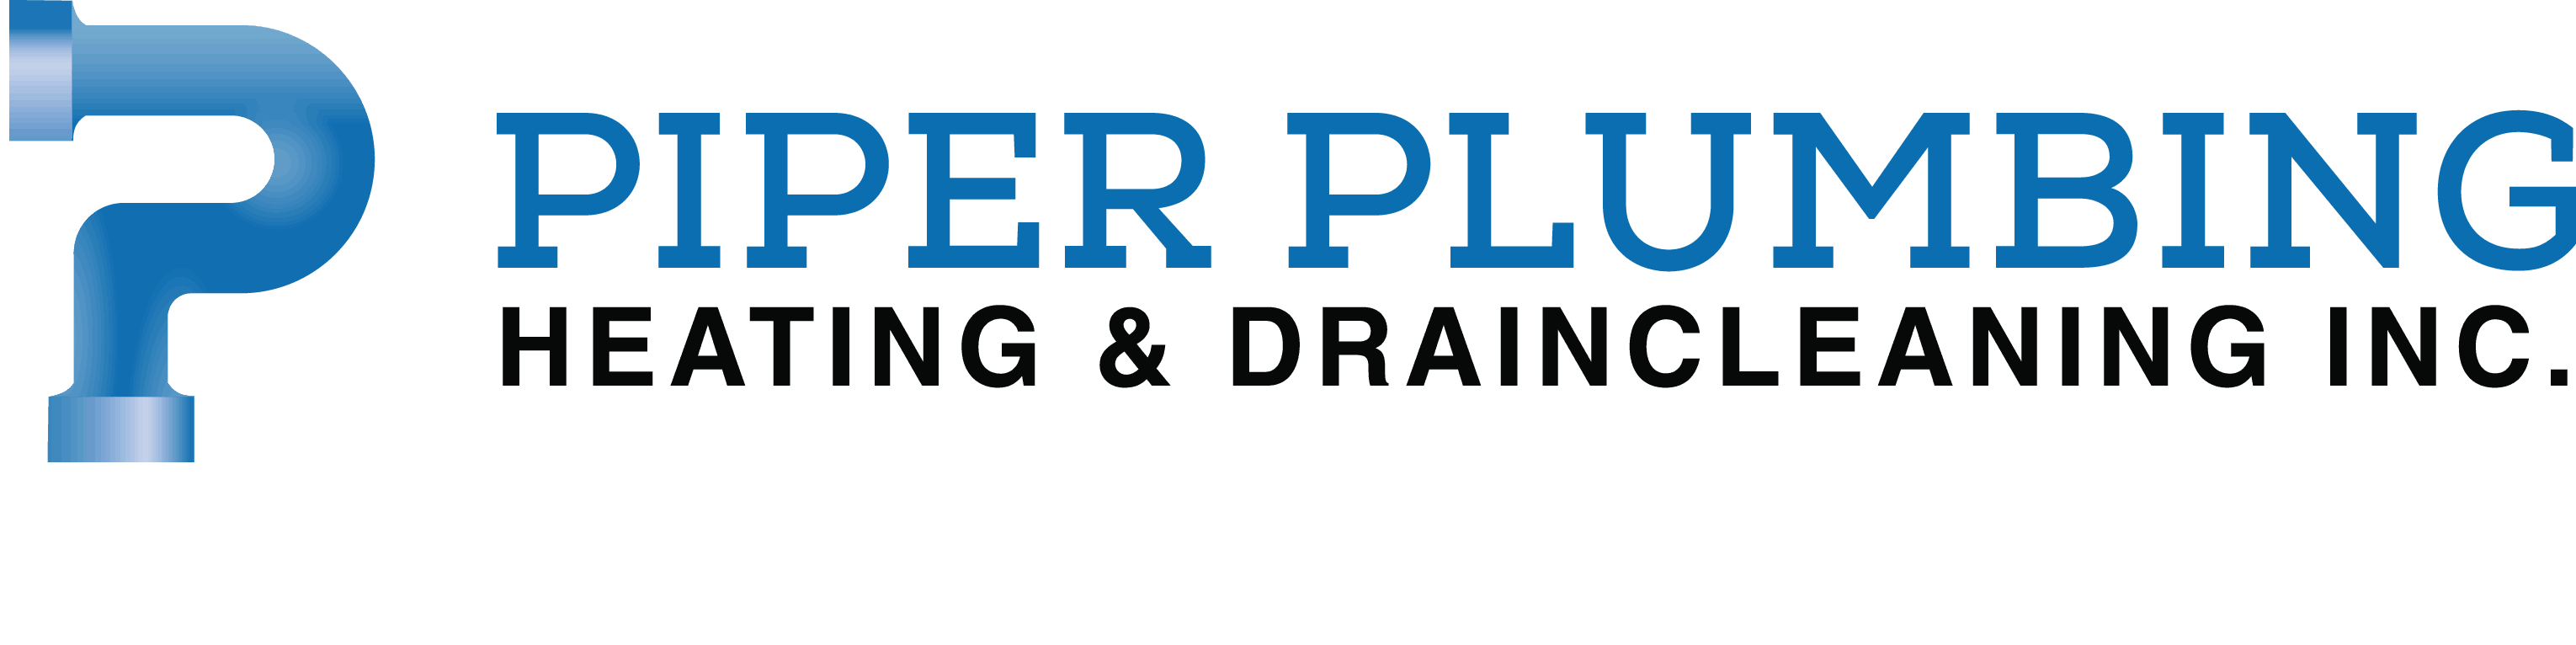 Piper Plumbing, Heating, Drain Cleaning